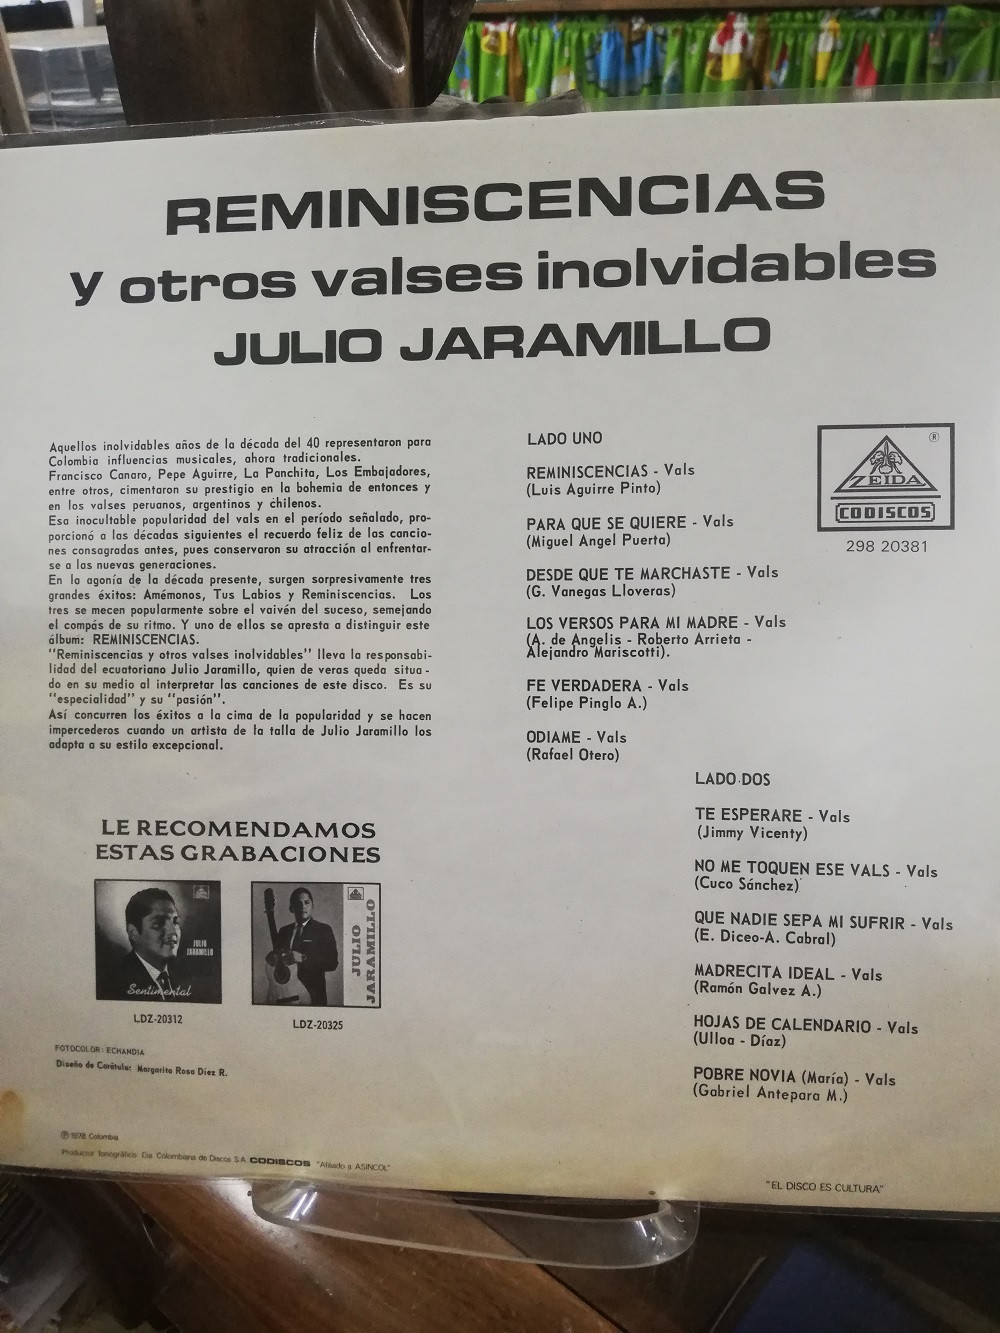 Imagen LP JULIO JARAMILLO - REMINISCENCIAS Y OTROS VALSES INOLVIDABLES 2